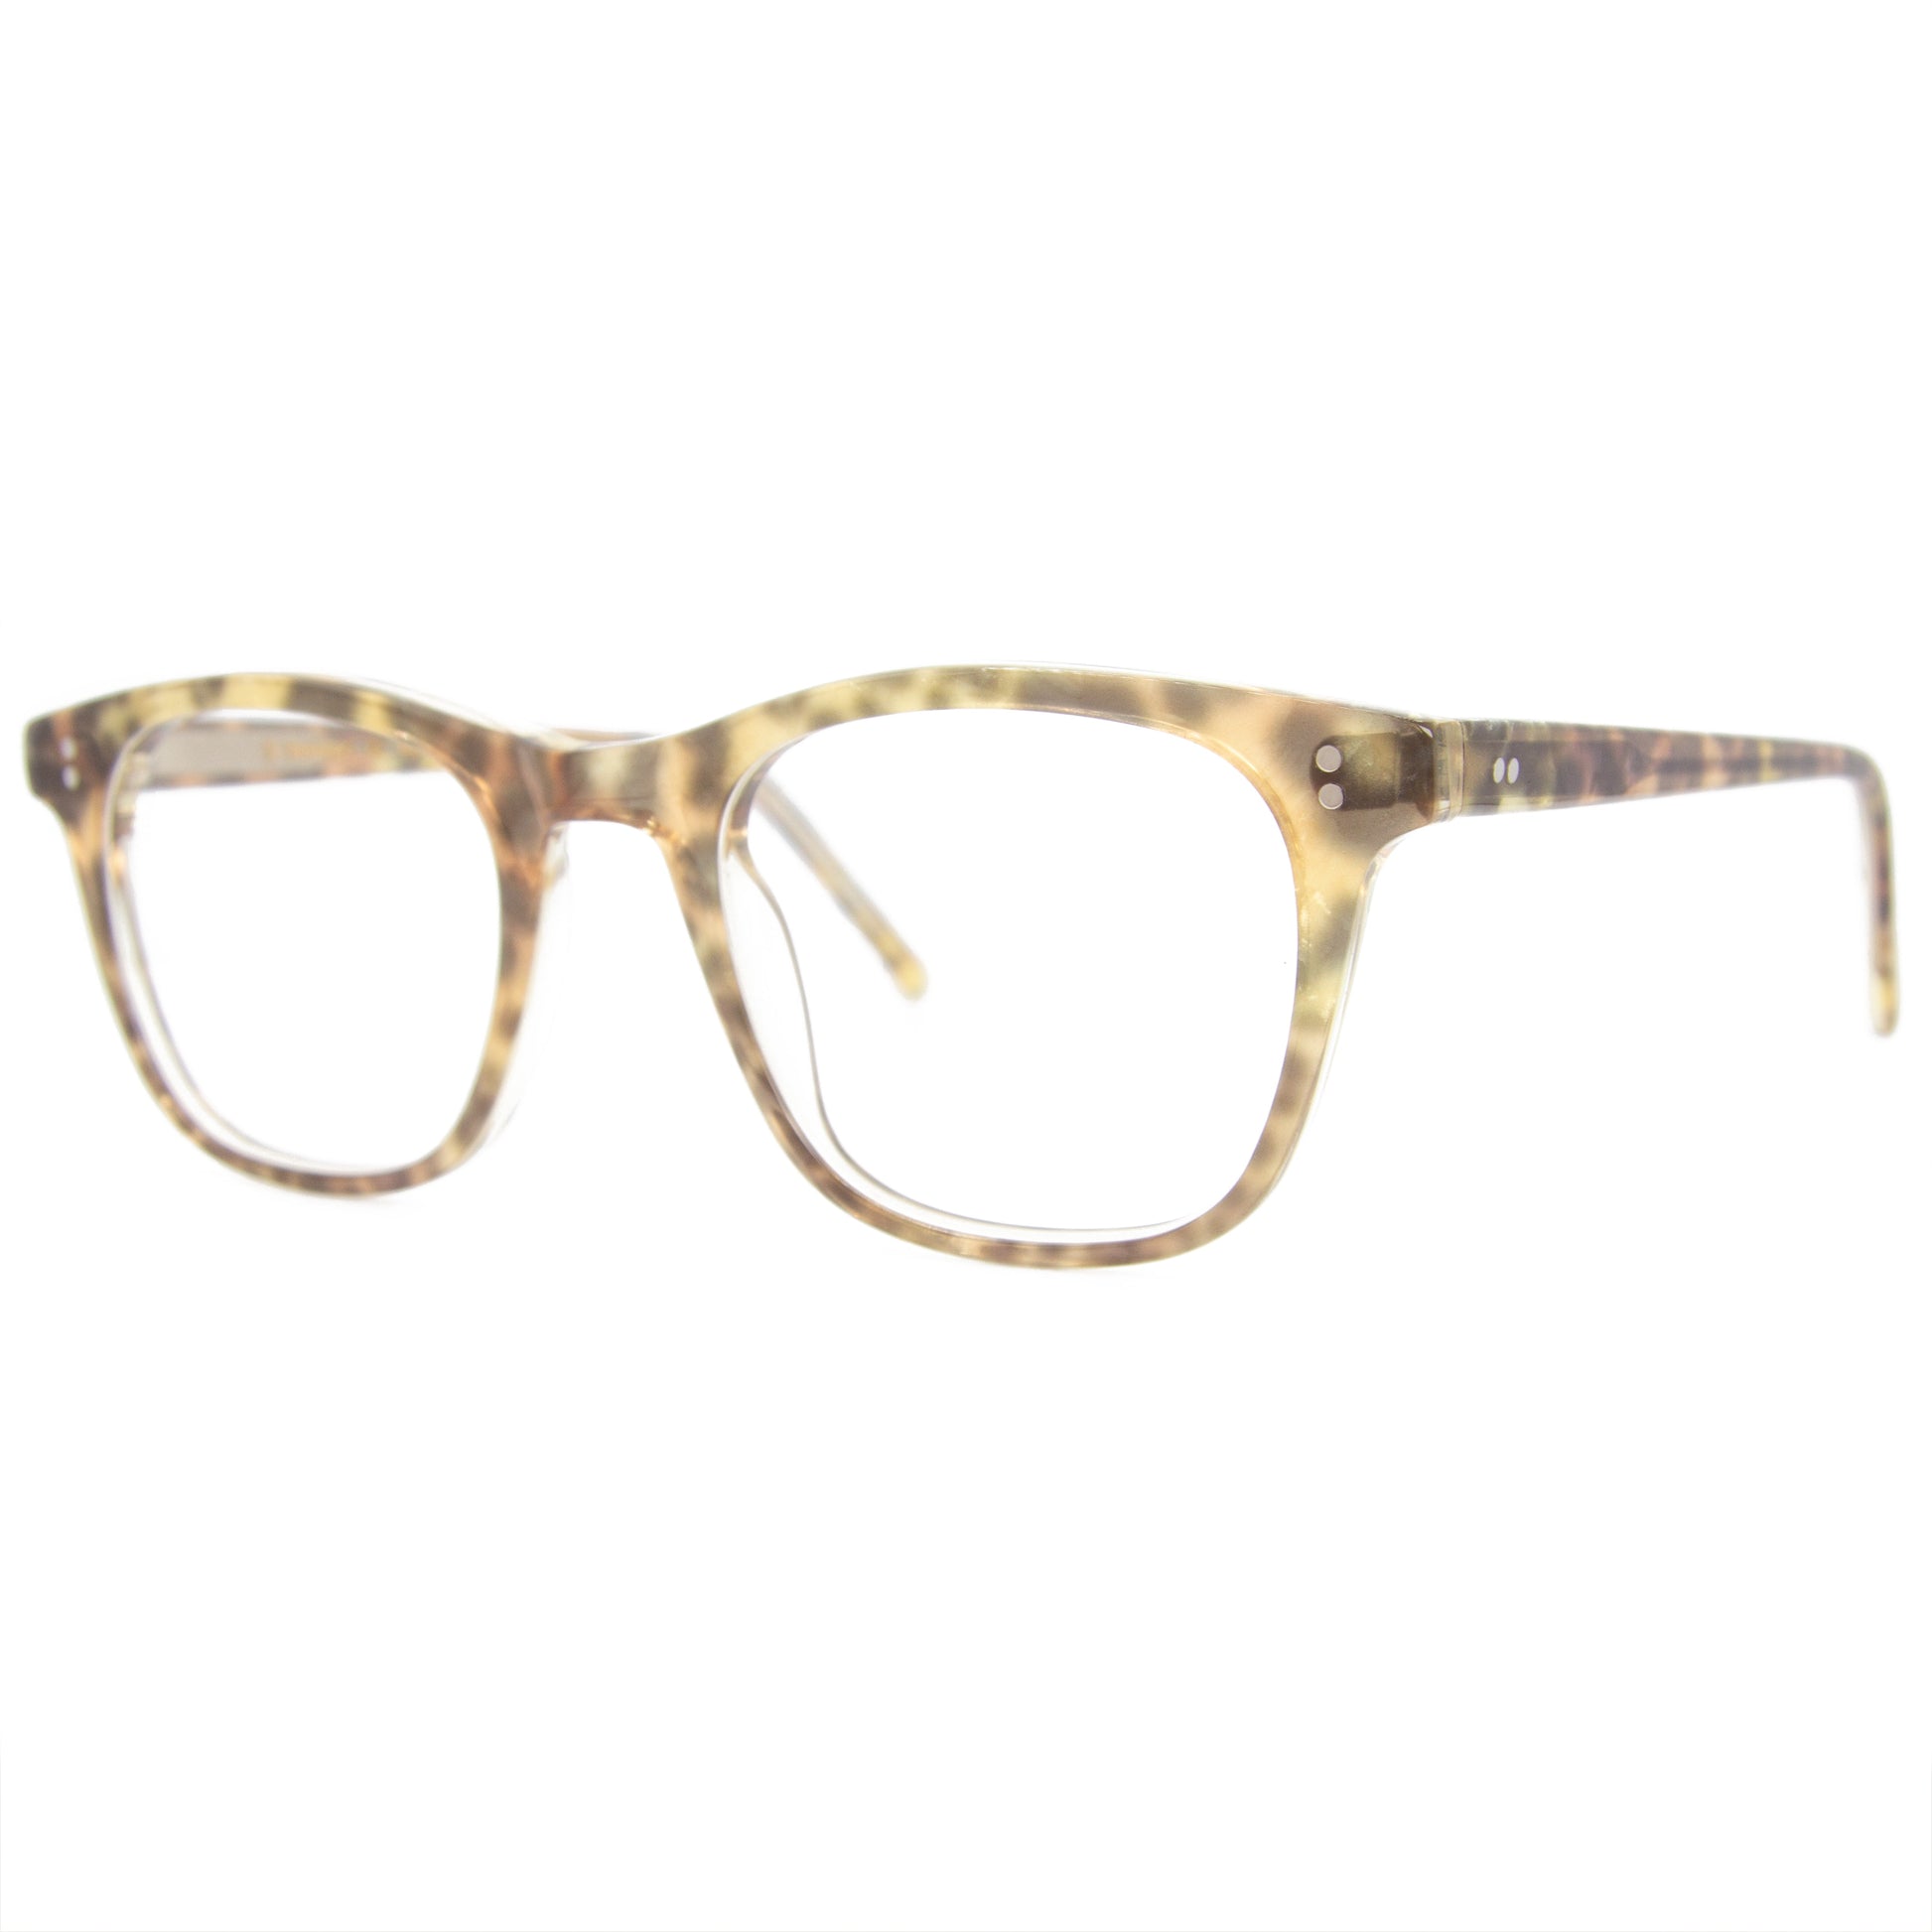 3 brothers - Yai Yai Alki - Leopard - Prescription Glasses - Side